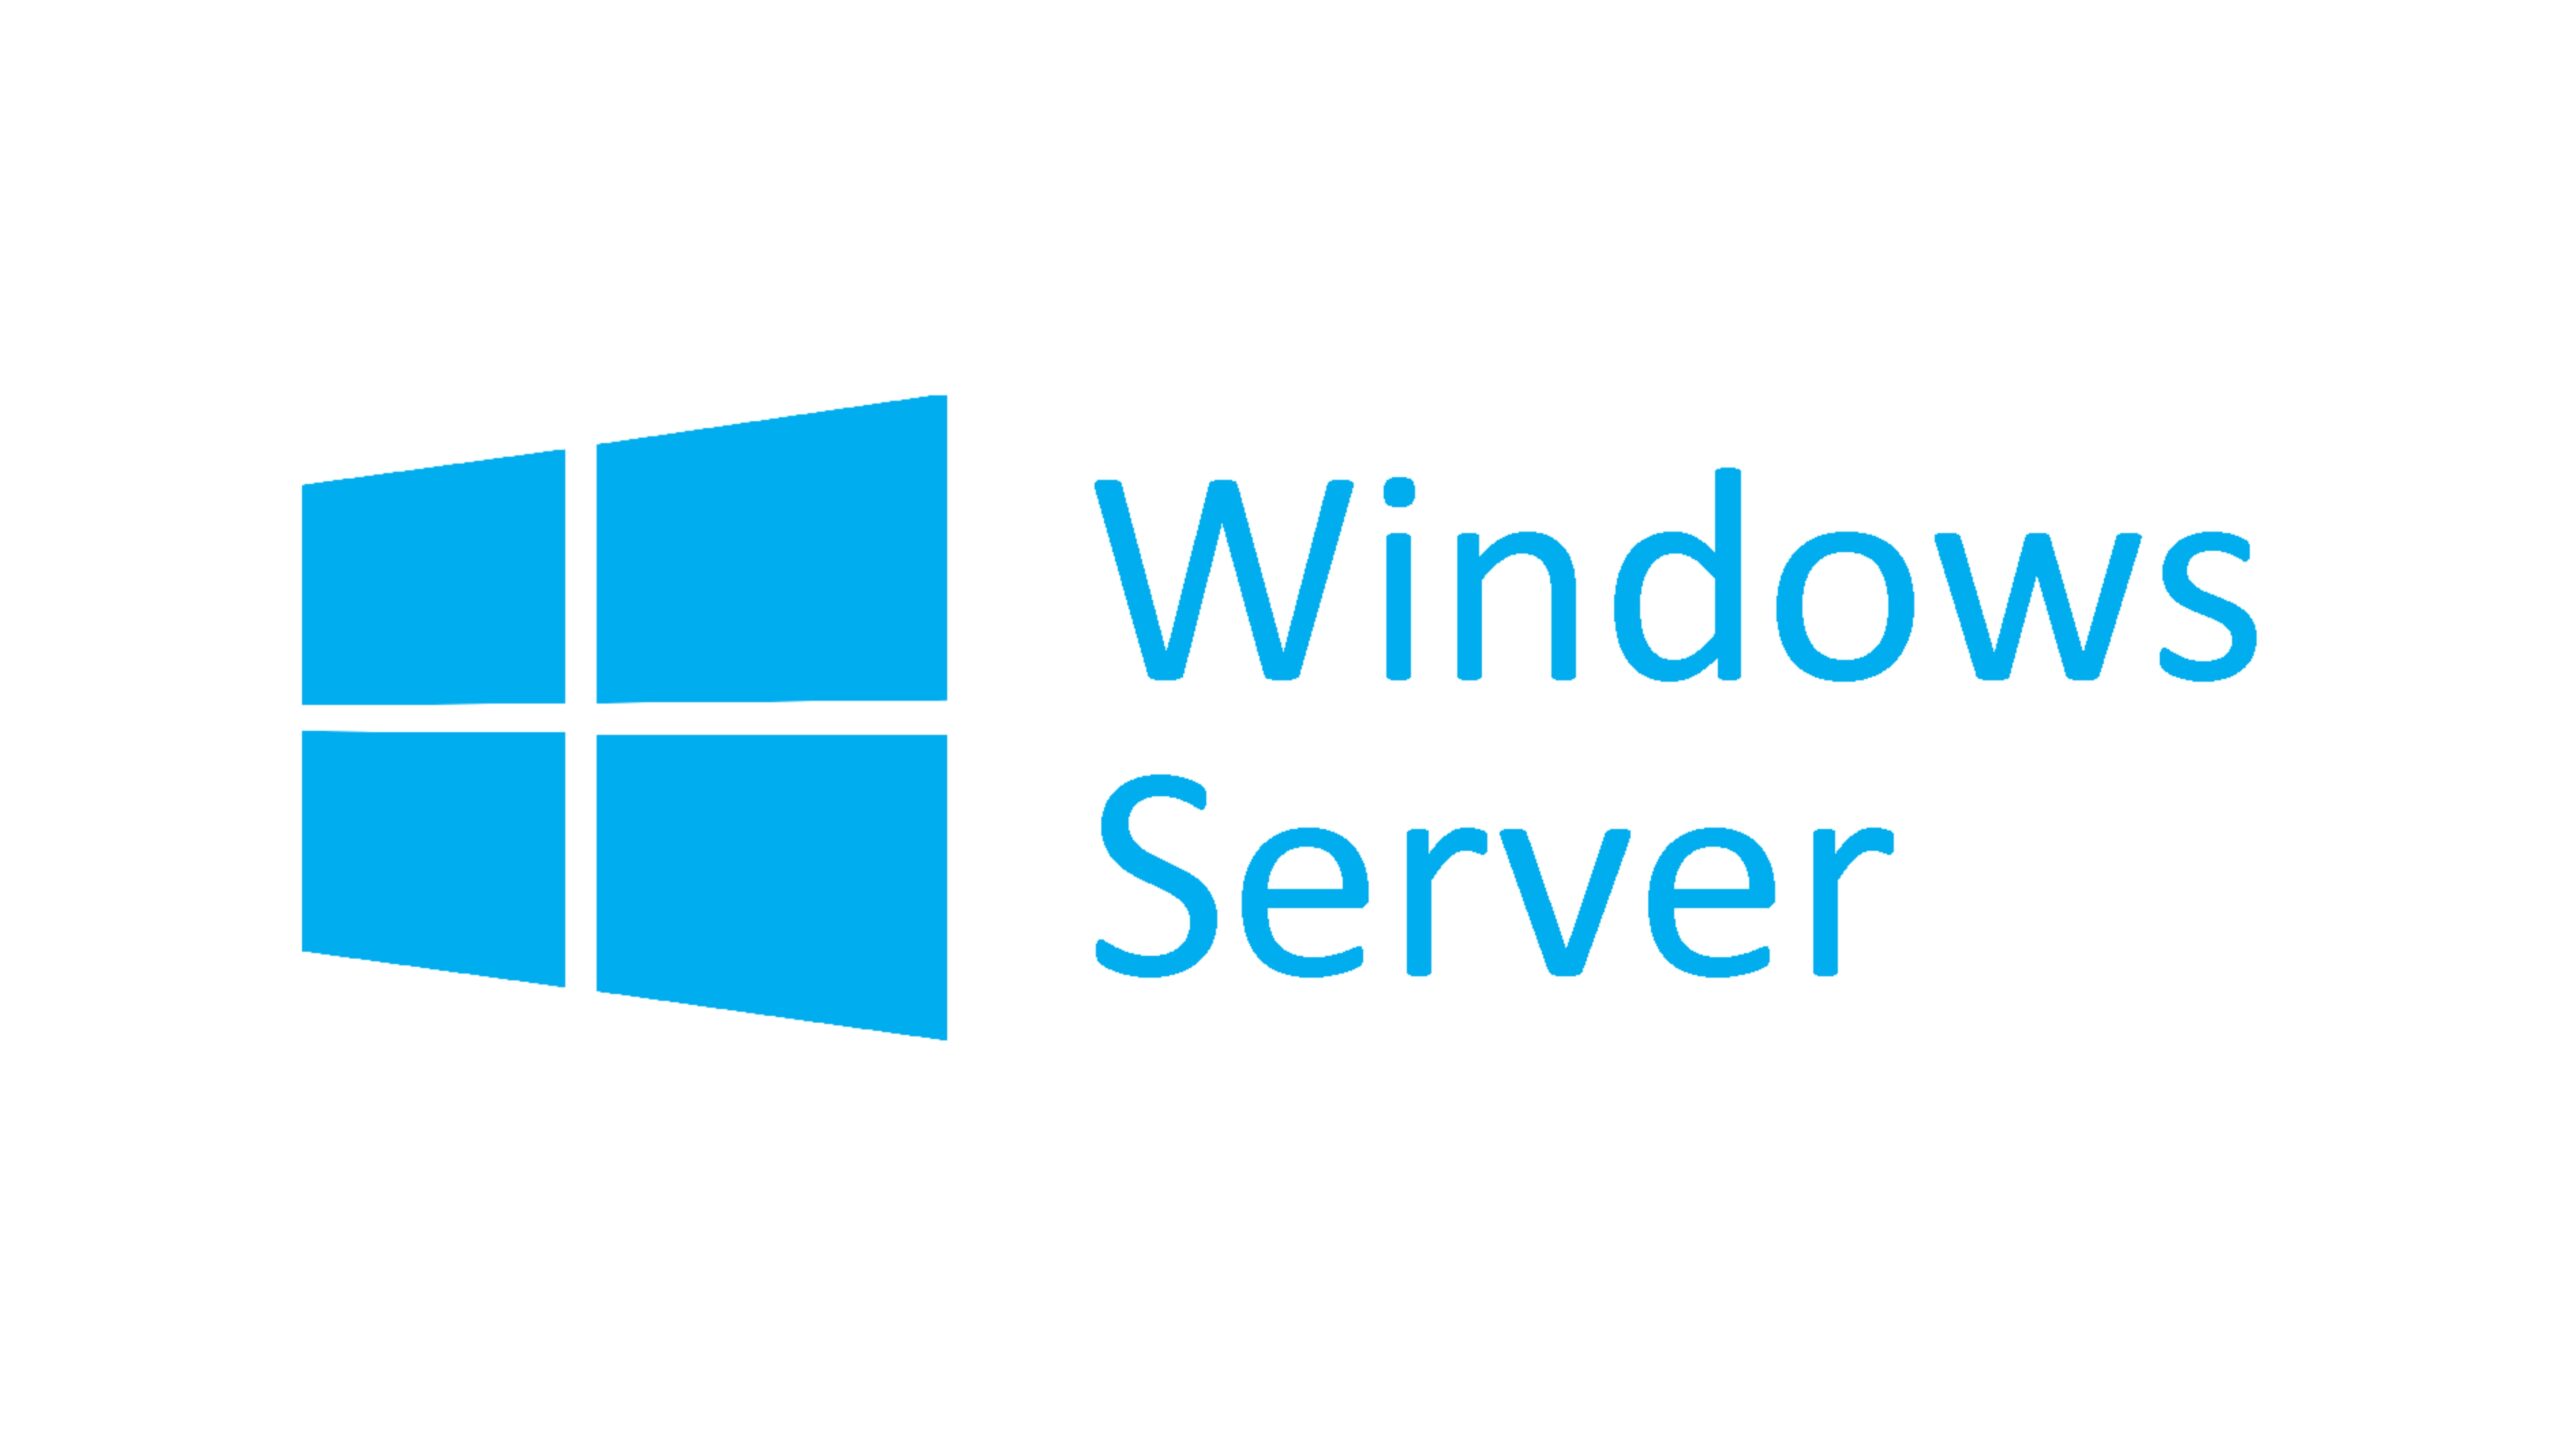 microsoft-corrige-problema-do-windows-server